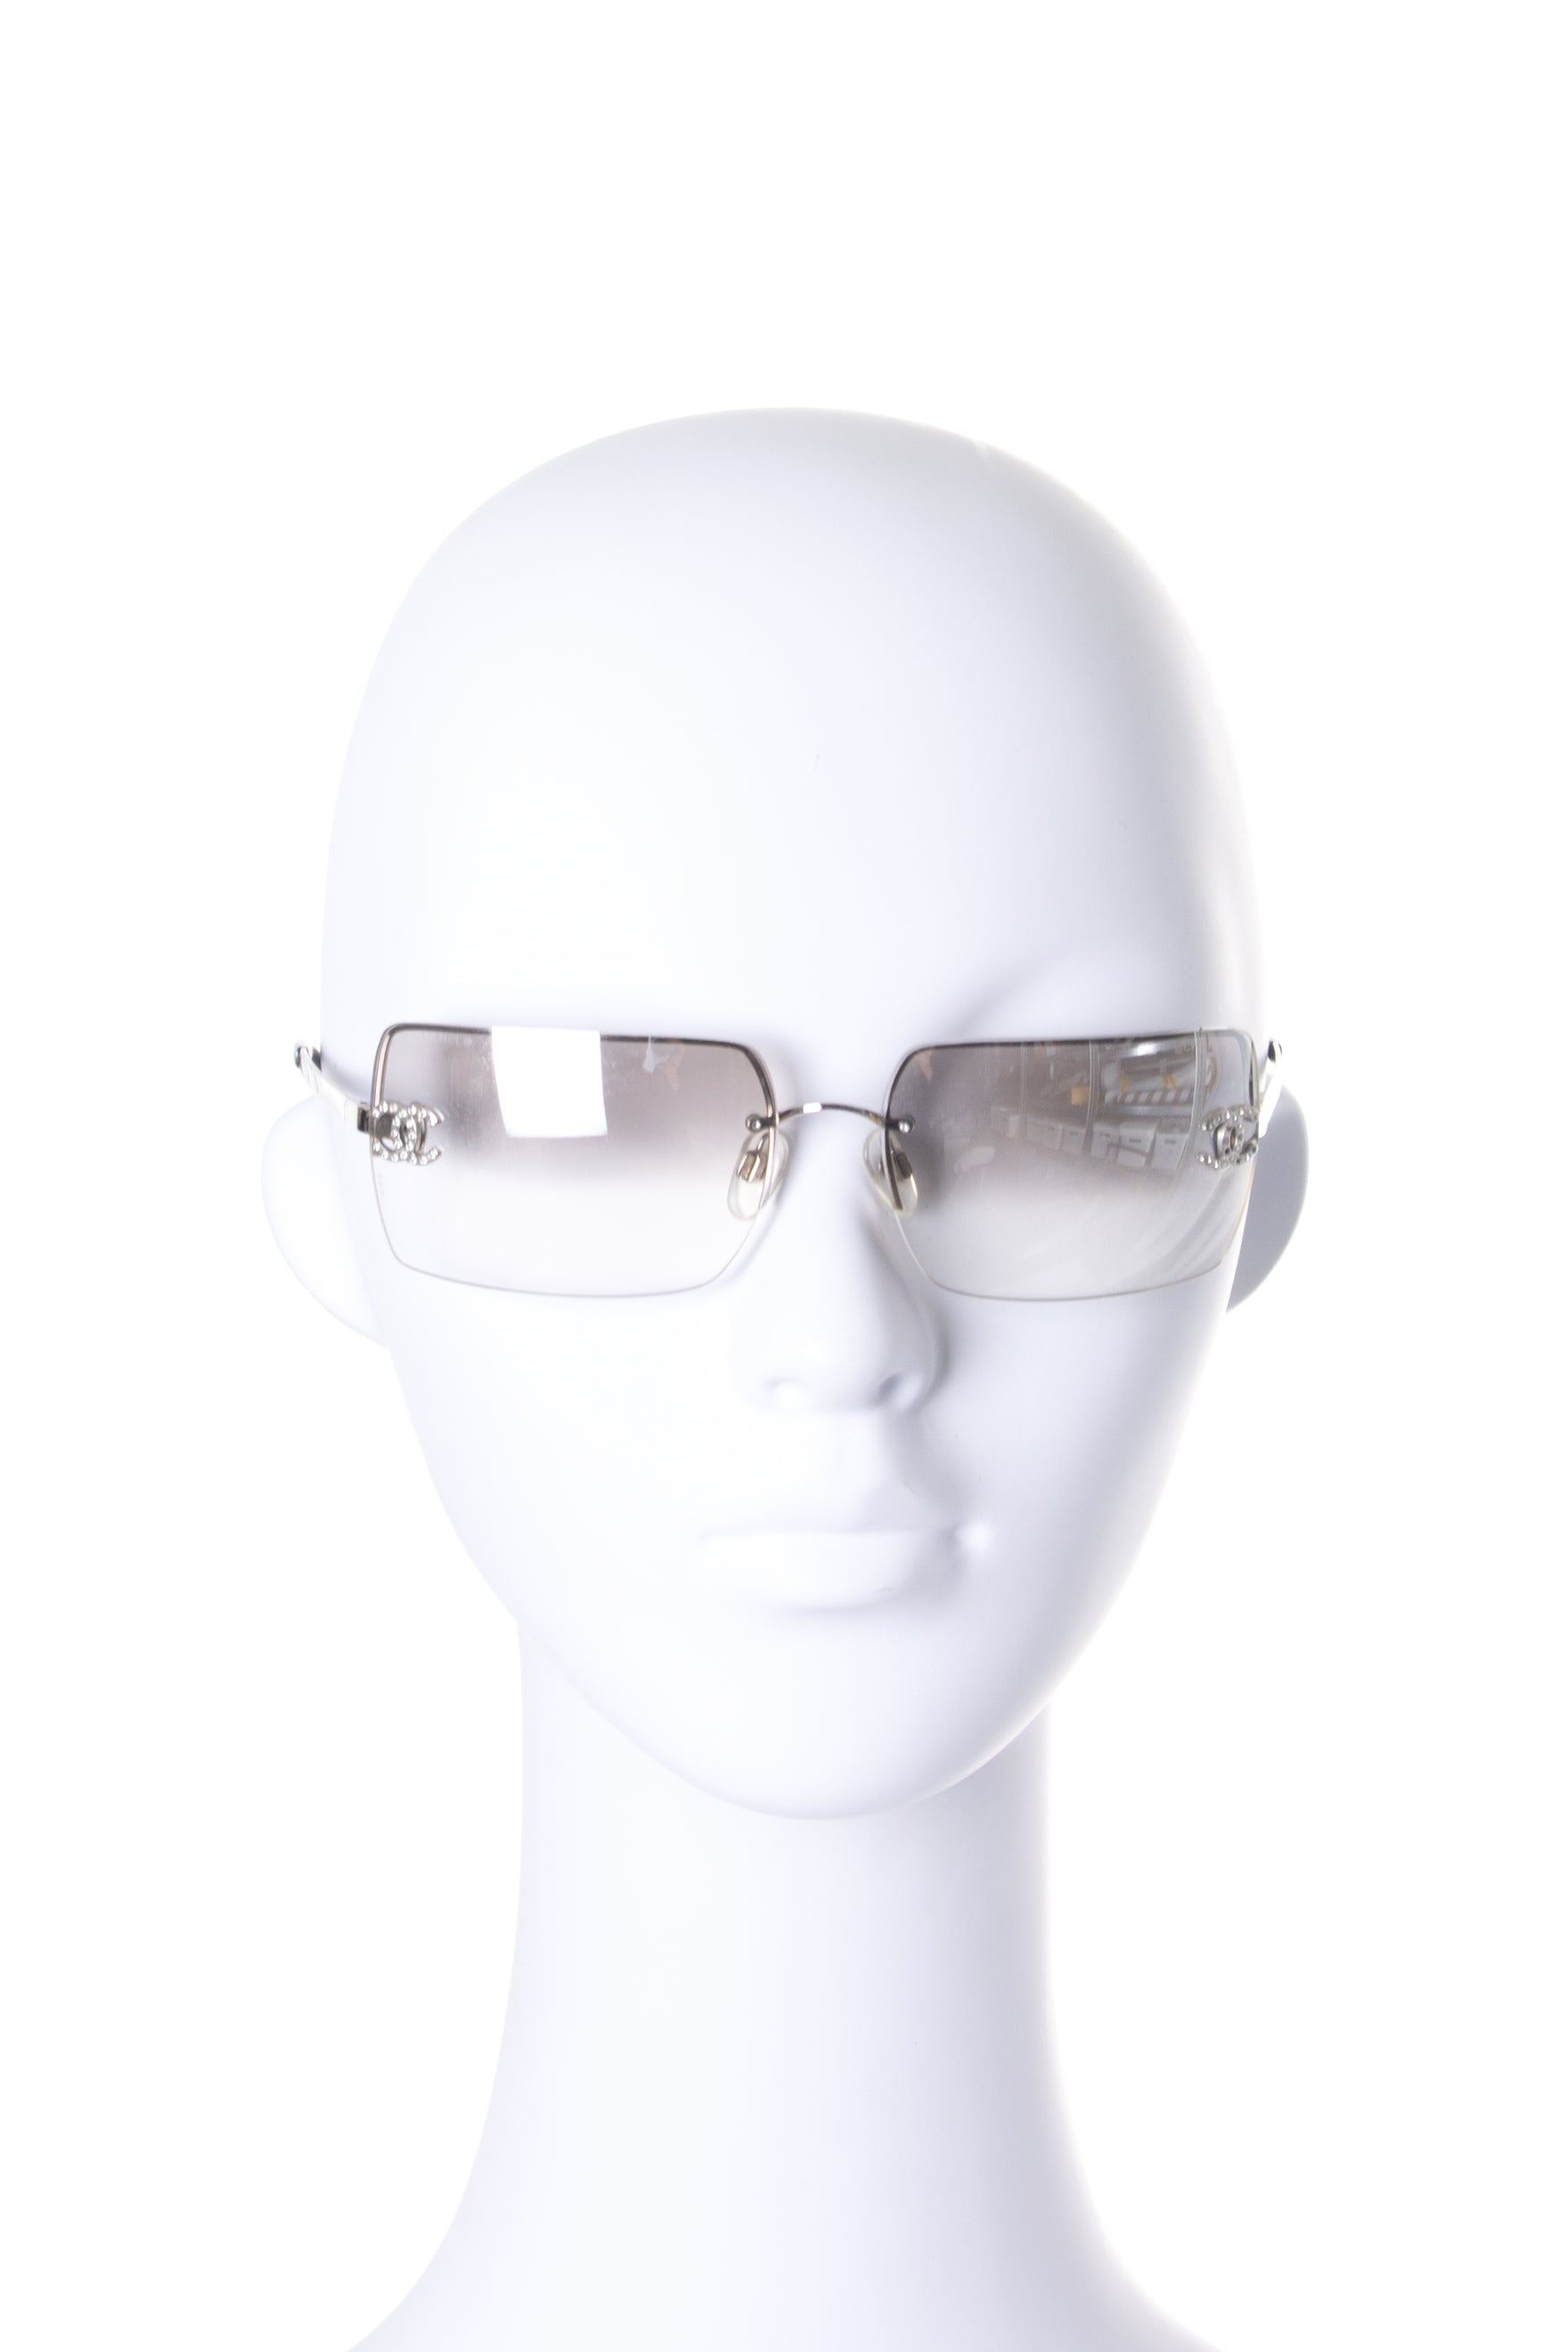 CHANEL Crystal CC Logo Sunglasses 4095 B 38331